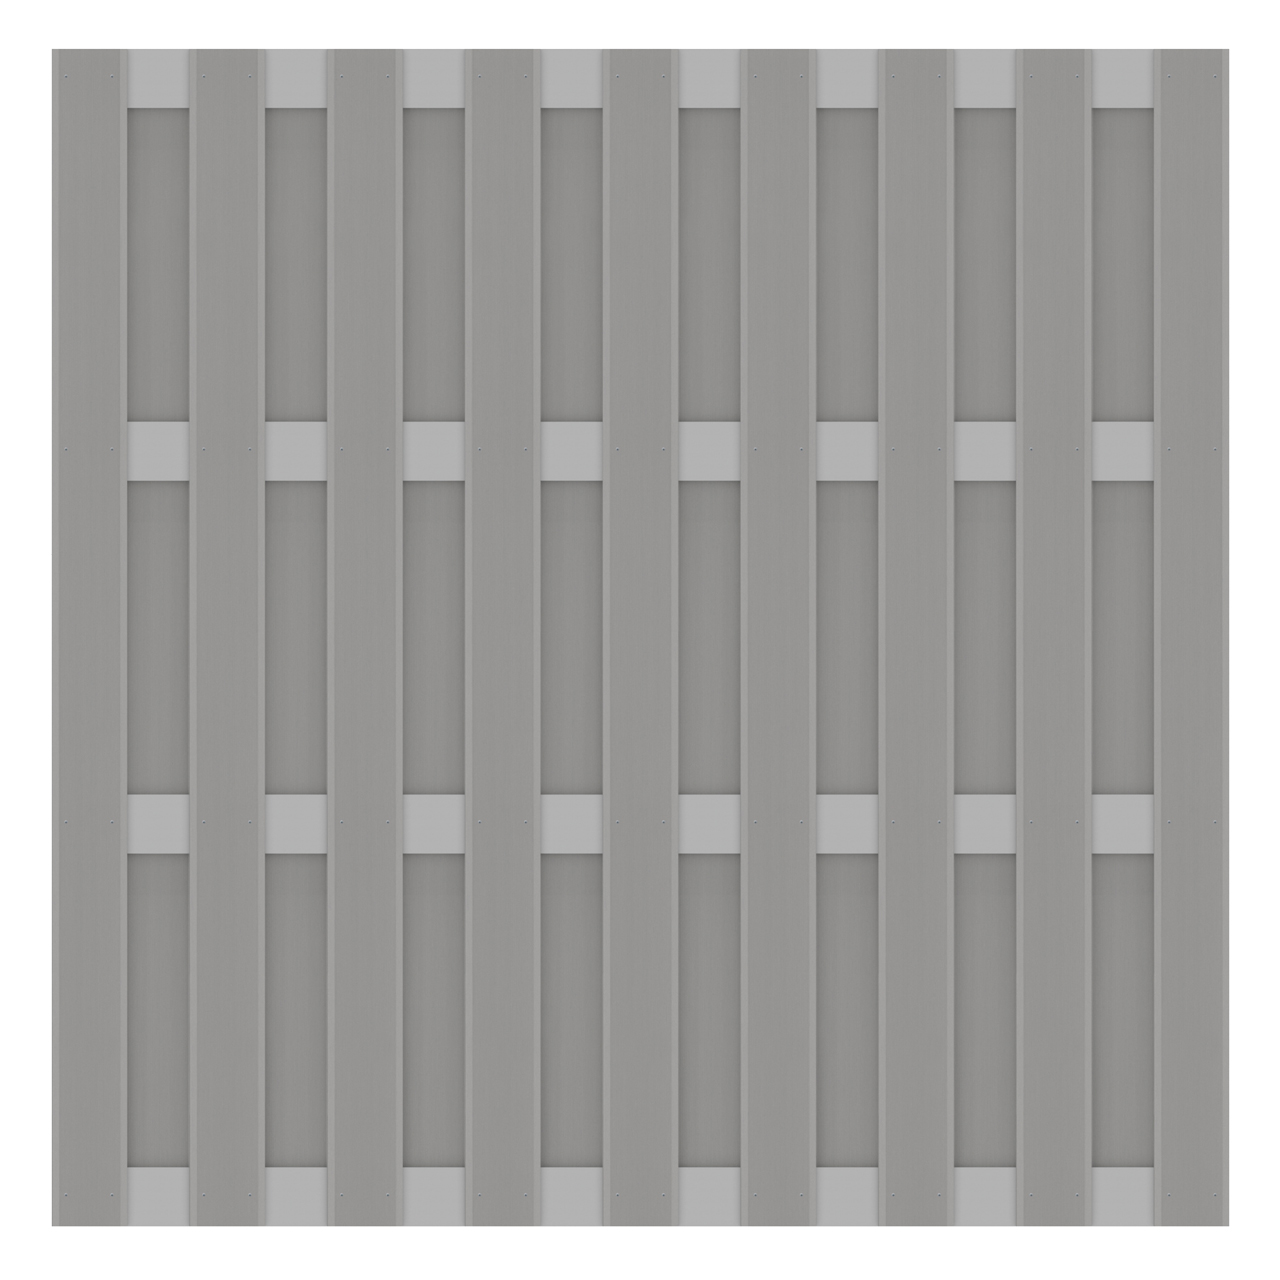 Sichtschutzzaun JUMBO WPC Alu-Design Grau Leisten Alu-Grau 179 x 179 cm (H x B)